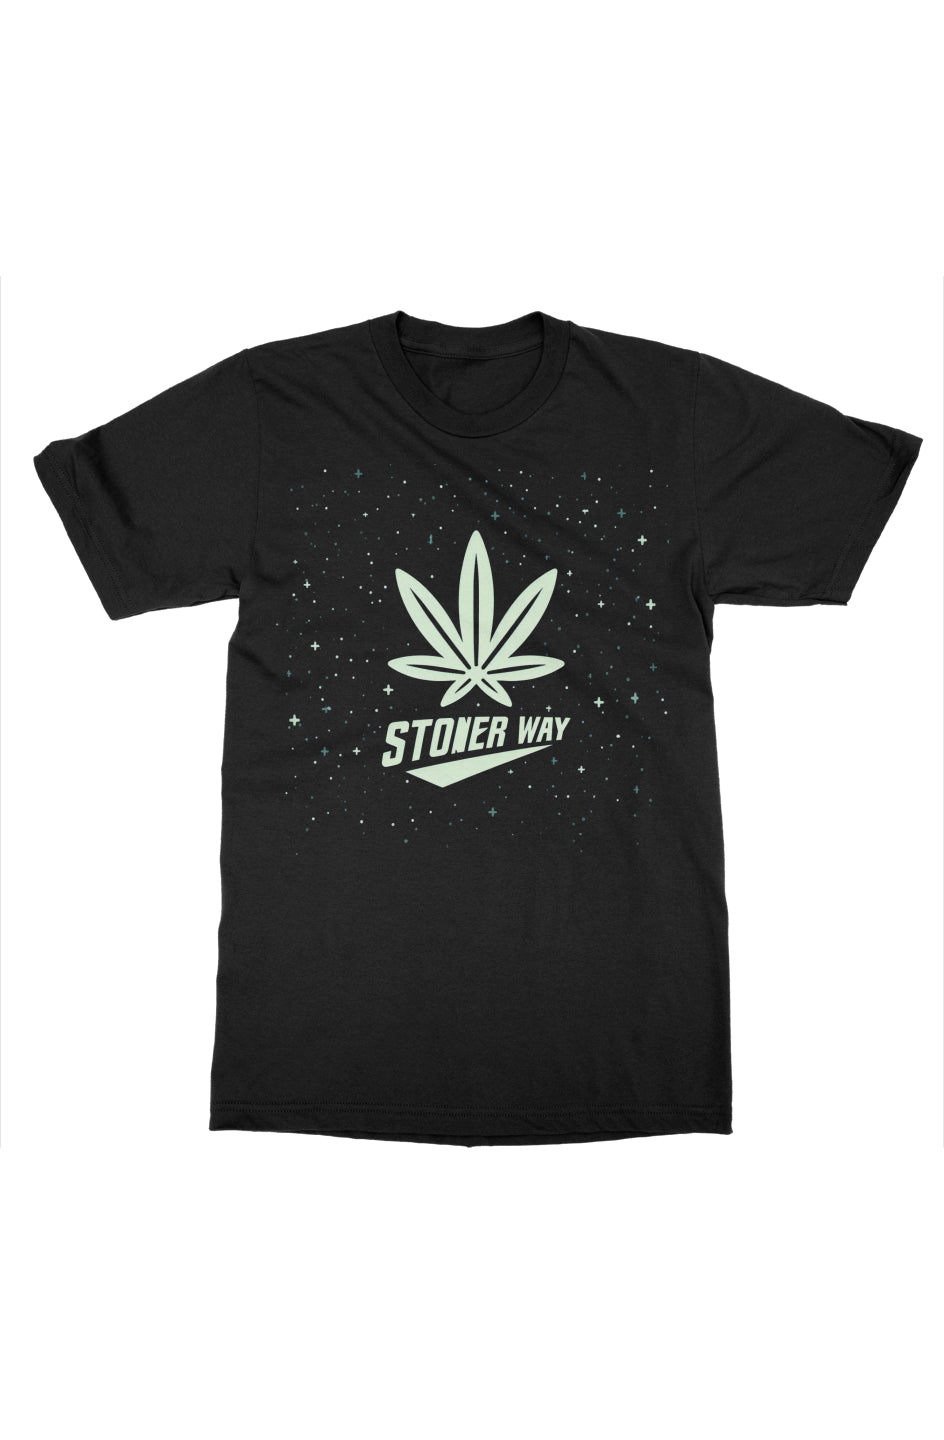 Stoner Way "Space" gildan mens t shirt